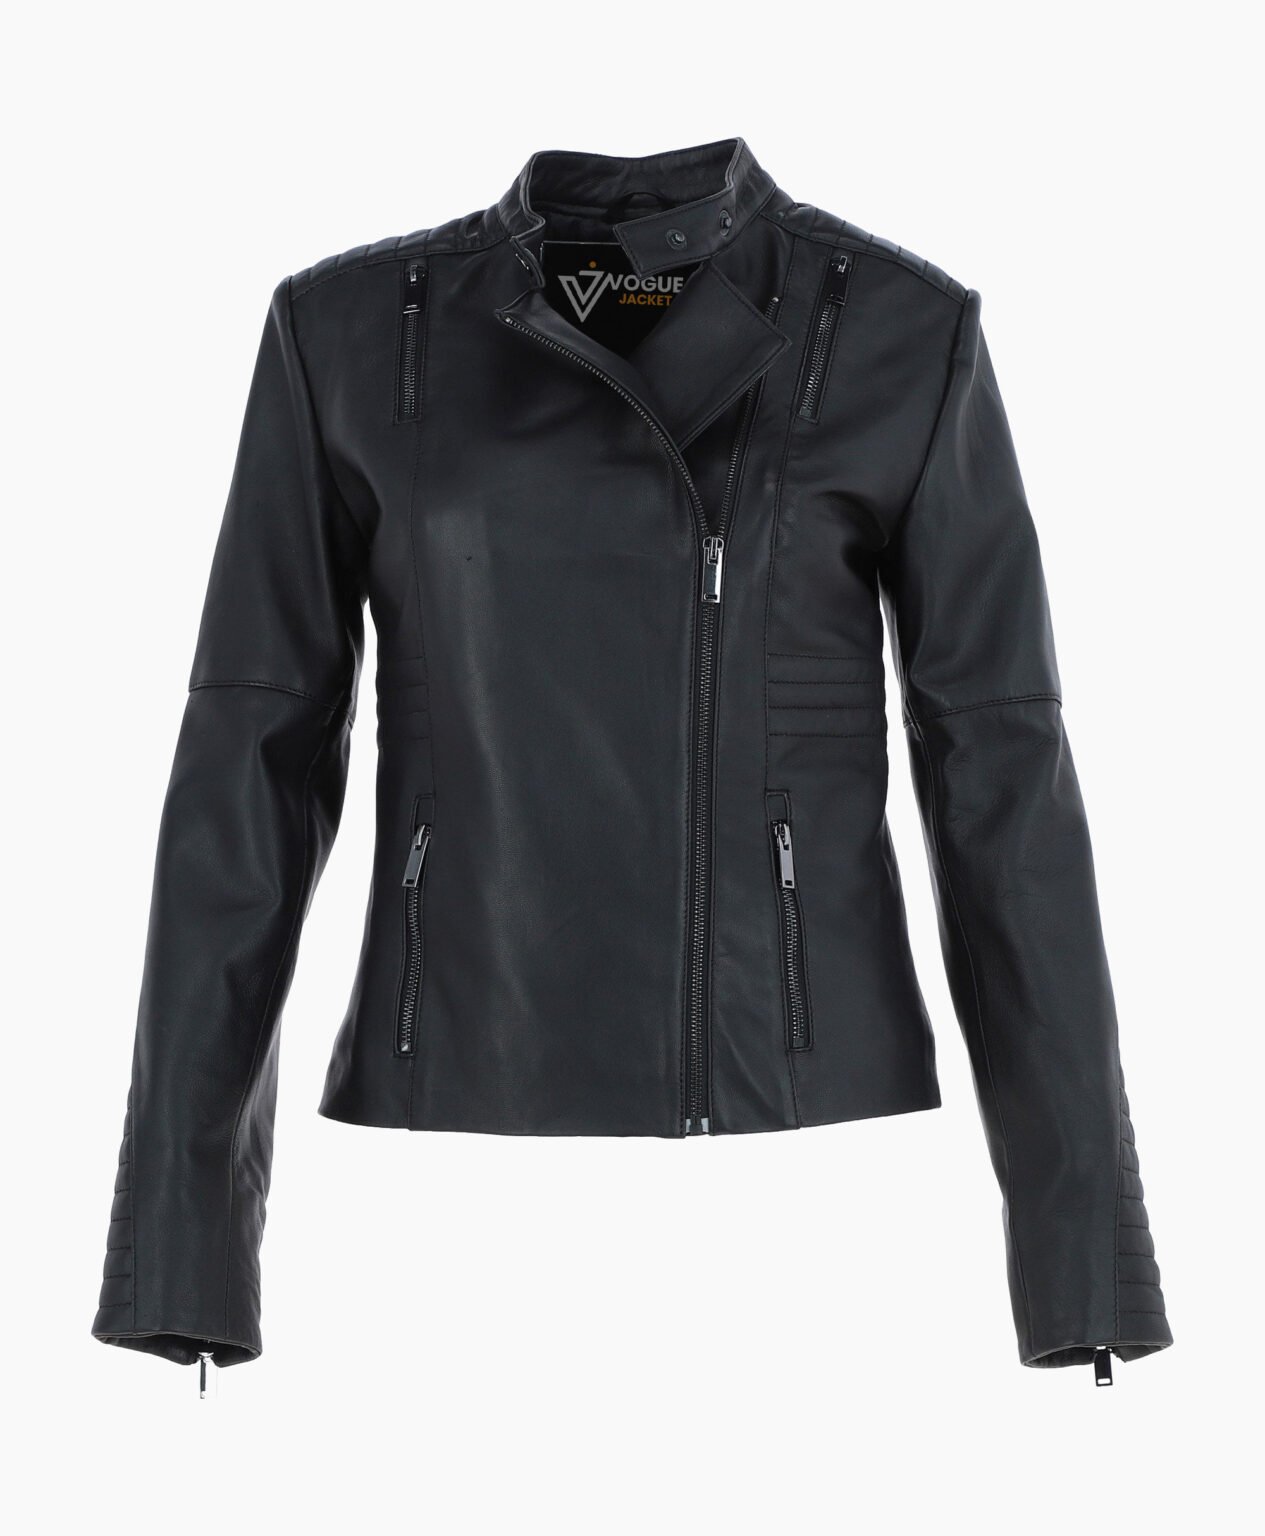 vogue-jacket-leather-biker-jacket-black-urbana-image200